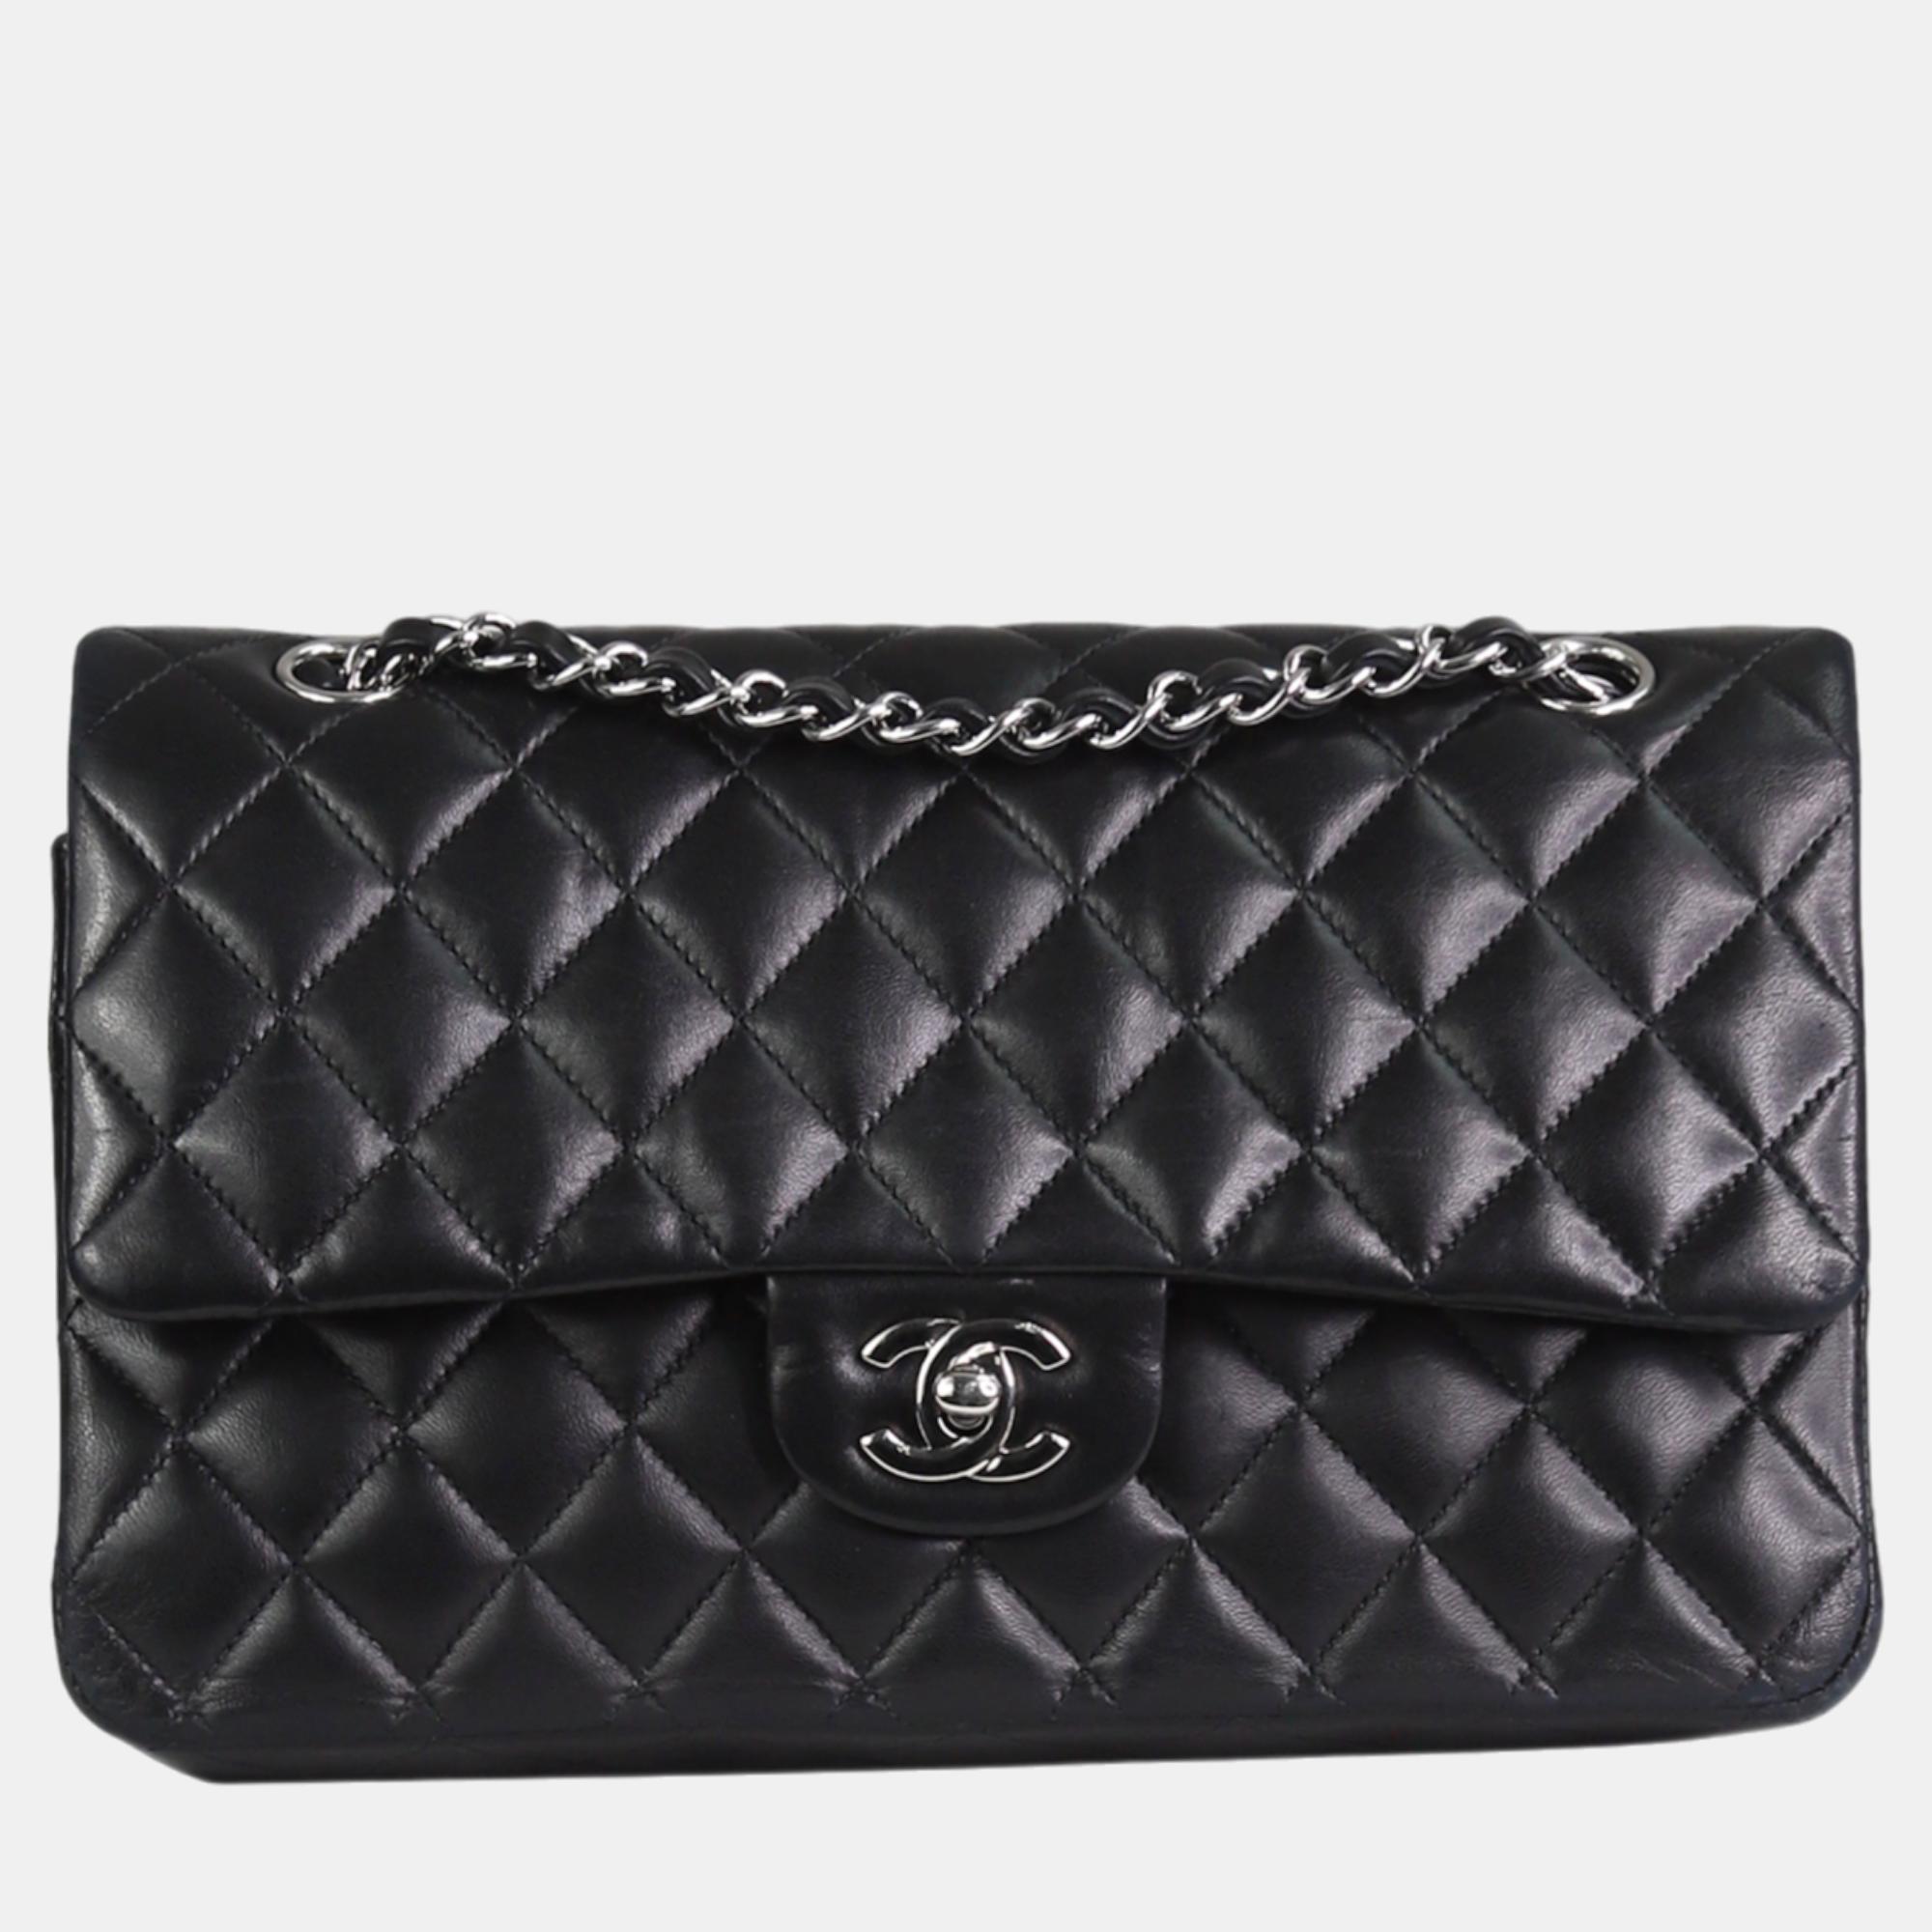 Chanel black leather classic double flap shoulder bag